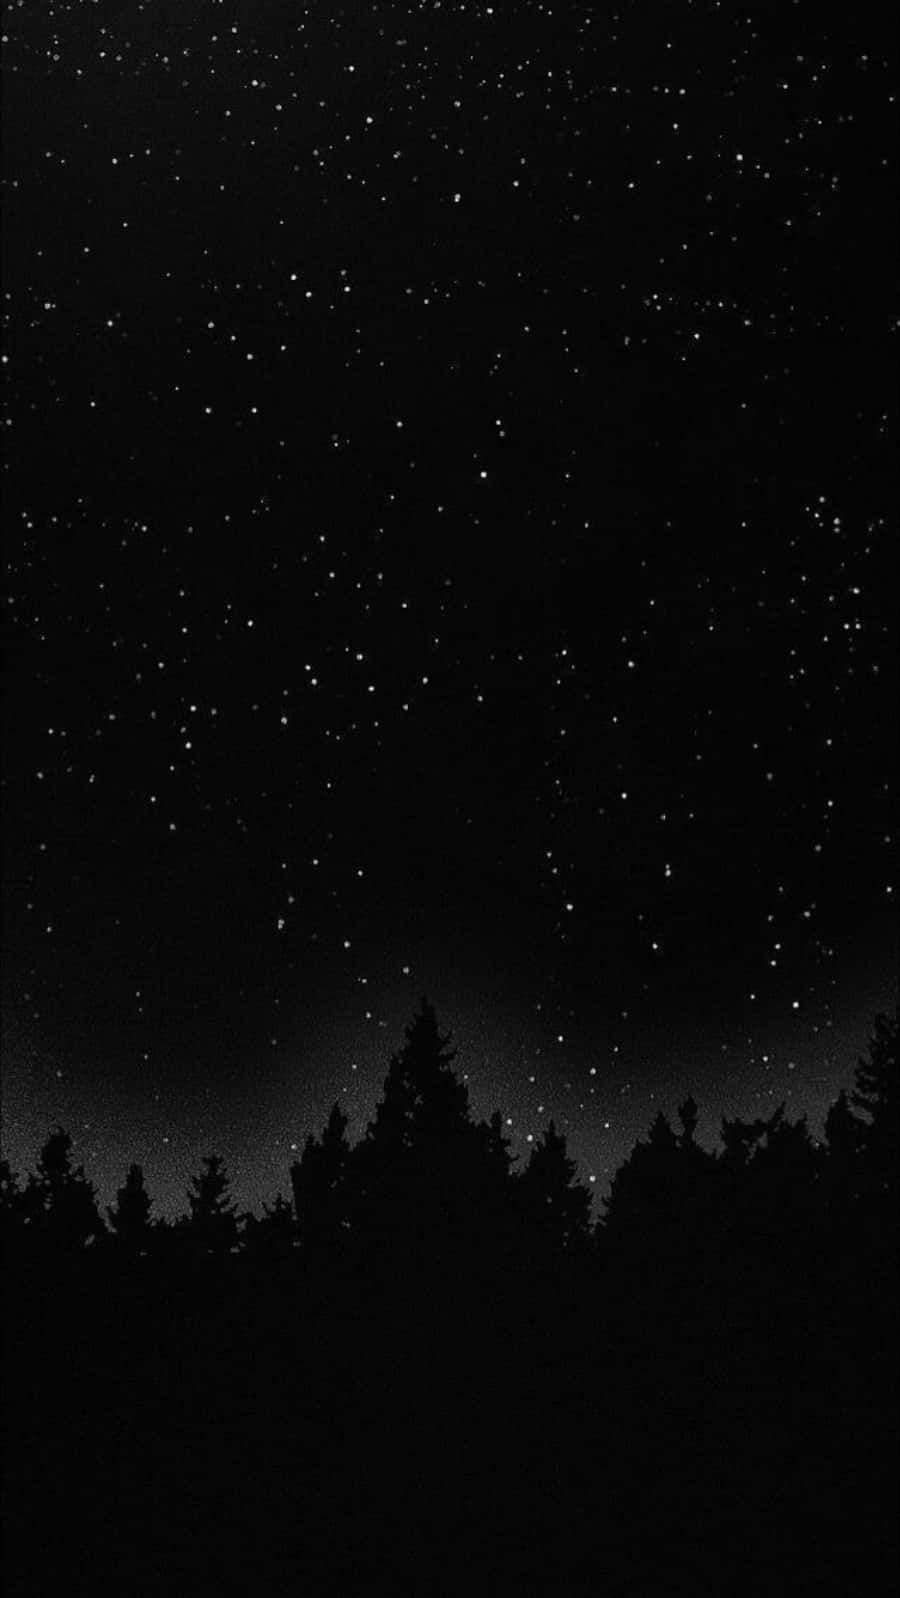 Dark Night Sky Picture